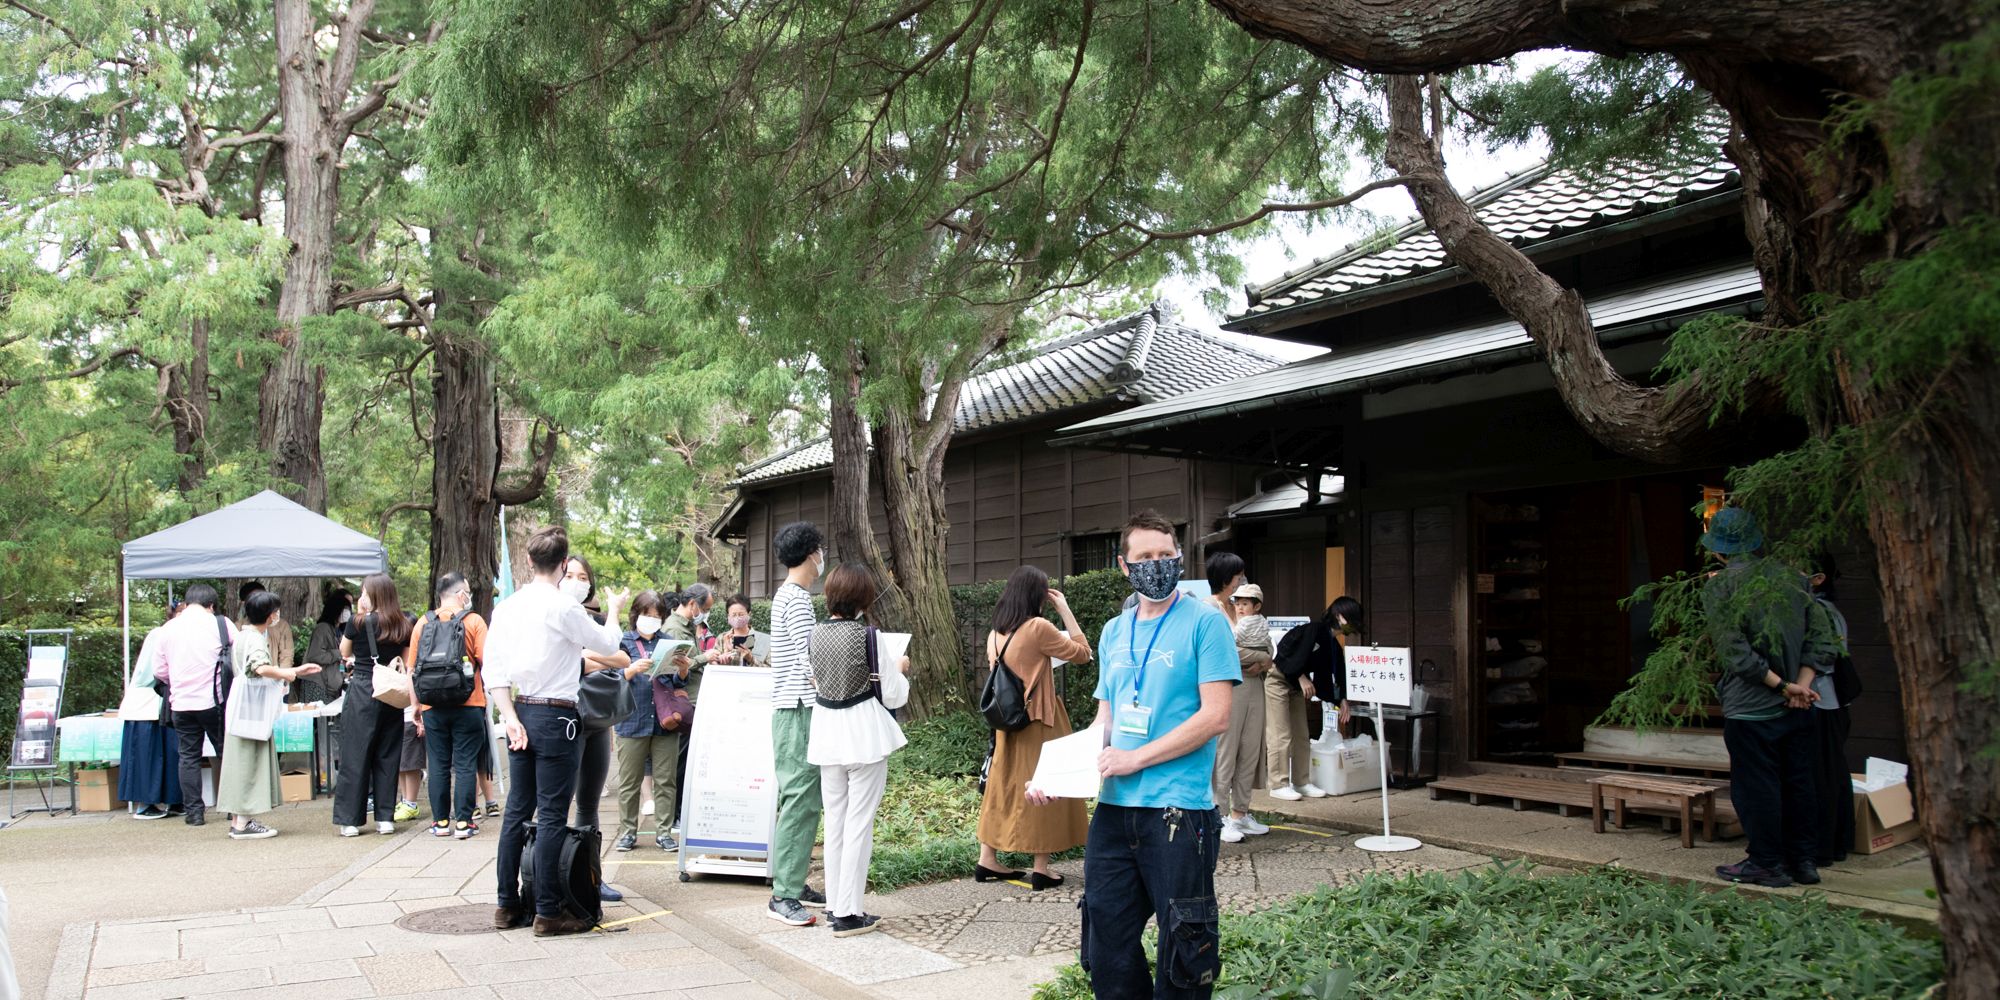 Matsudo International Science Art Festival: Impressions of the main venue